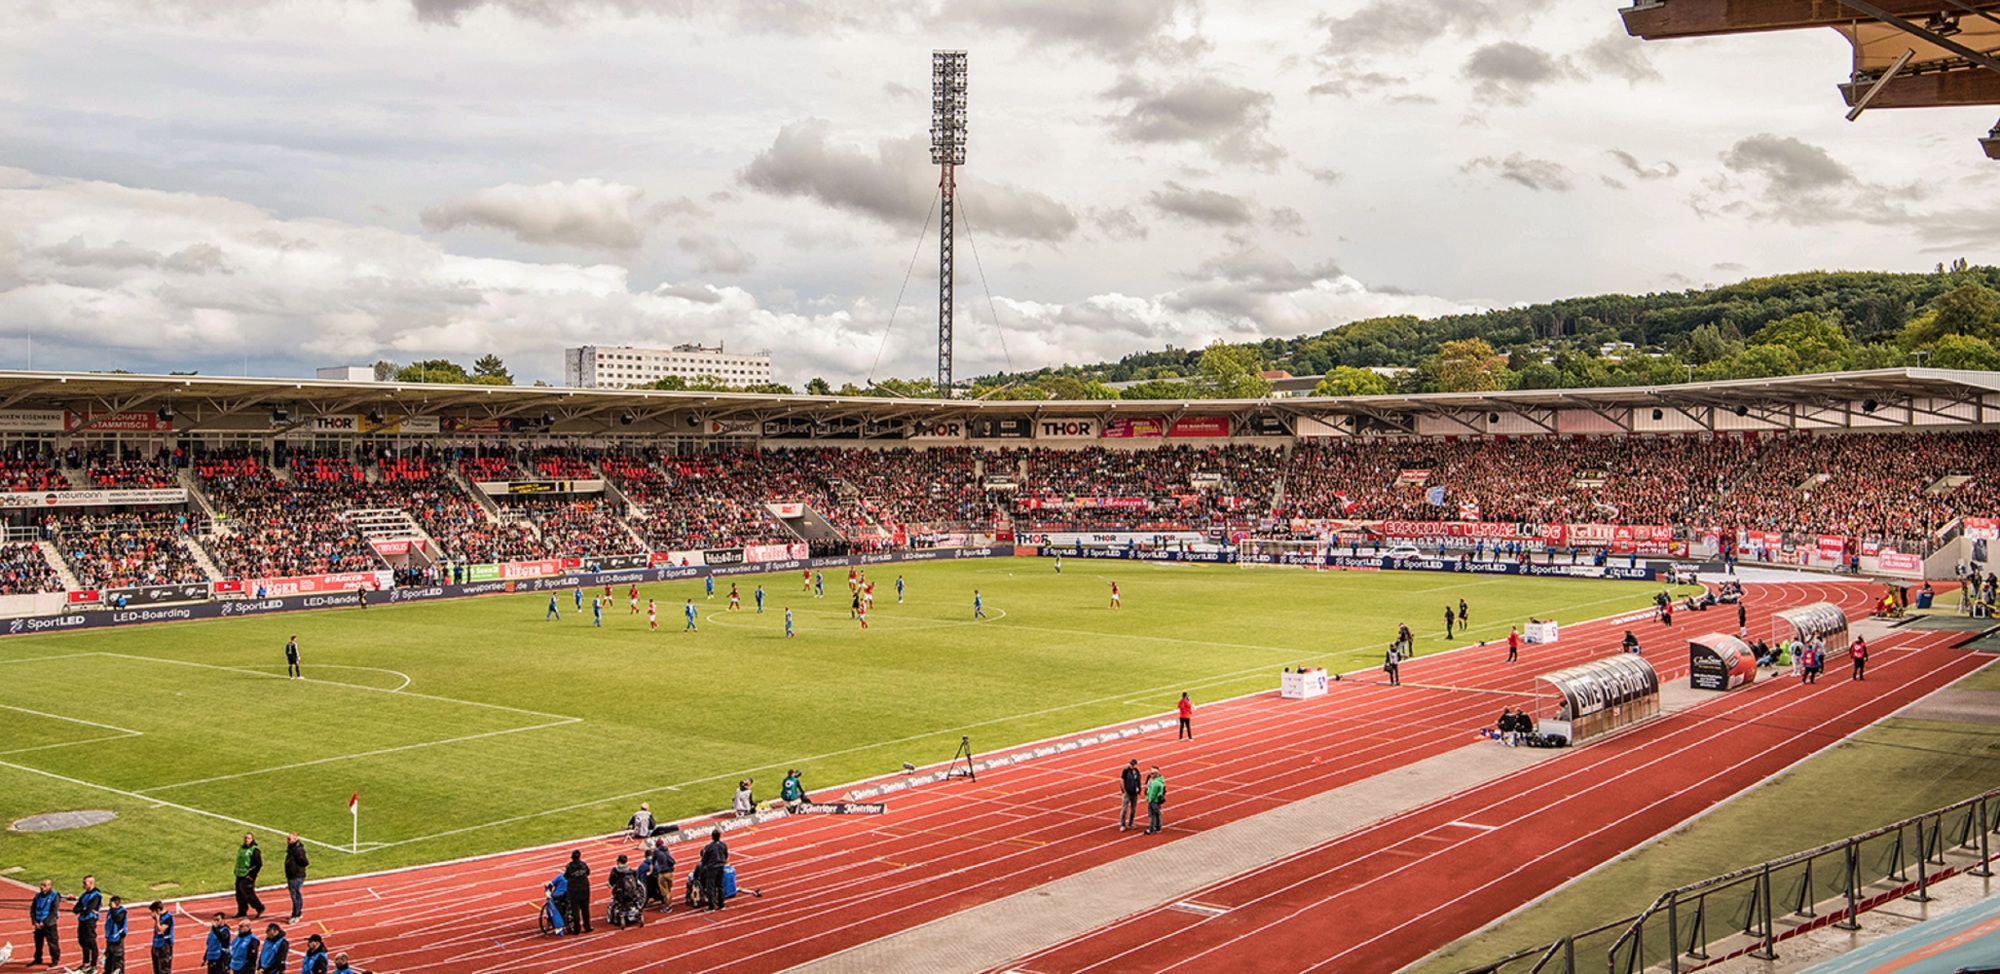 Vorbericht zum Thüringenderby gegen den FC Carl Zeiss JenaAktuelle News